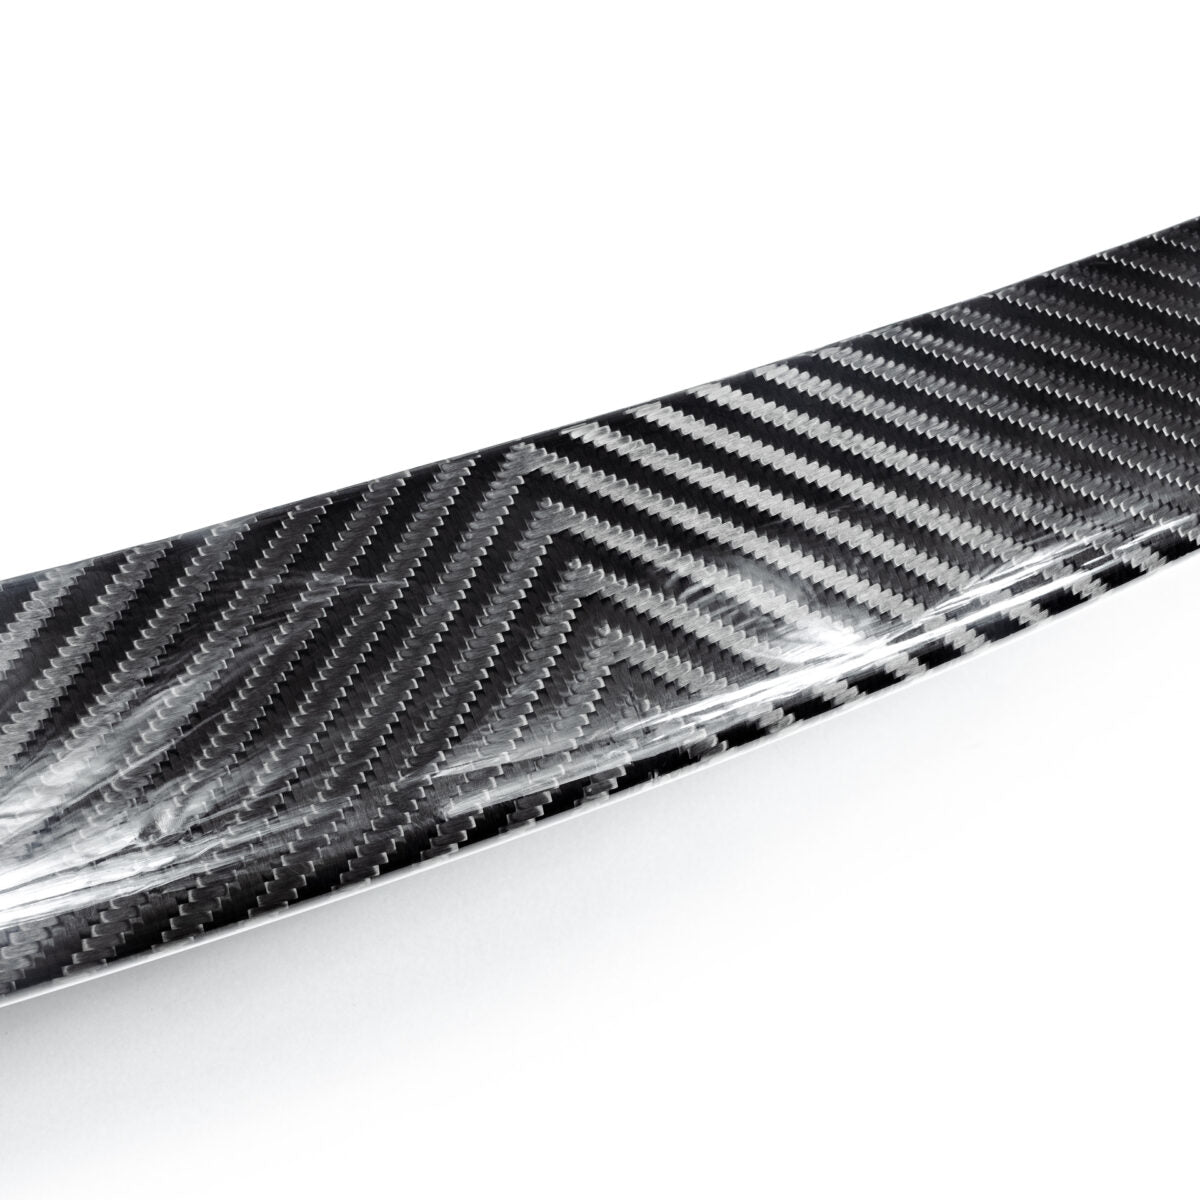 UP x Koenigsegg - Model X Carbon Fibre Long Tail Decklid Spoiler